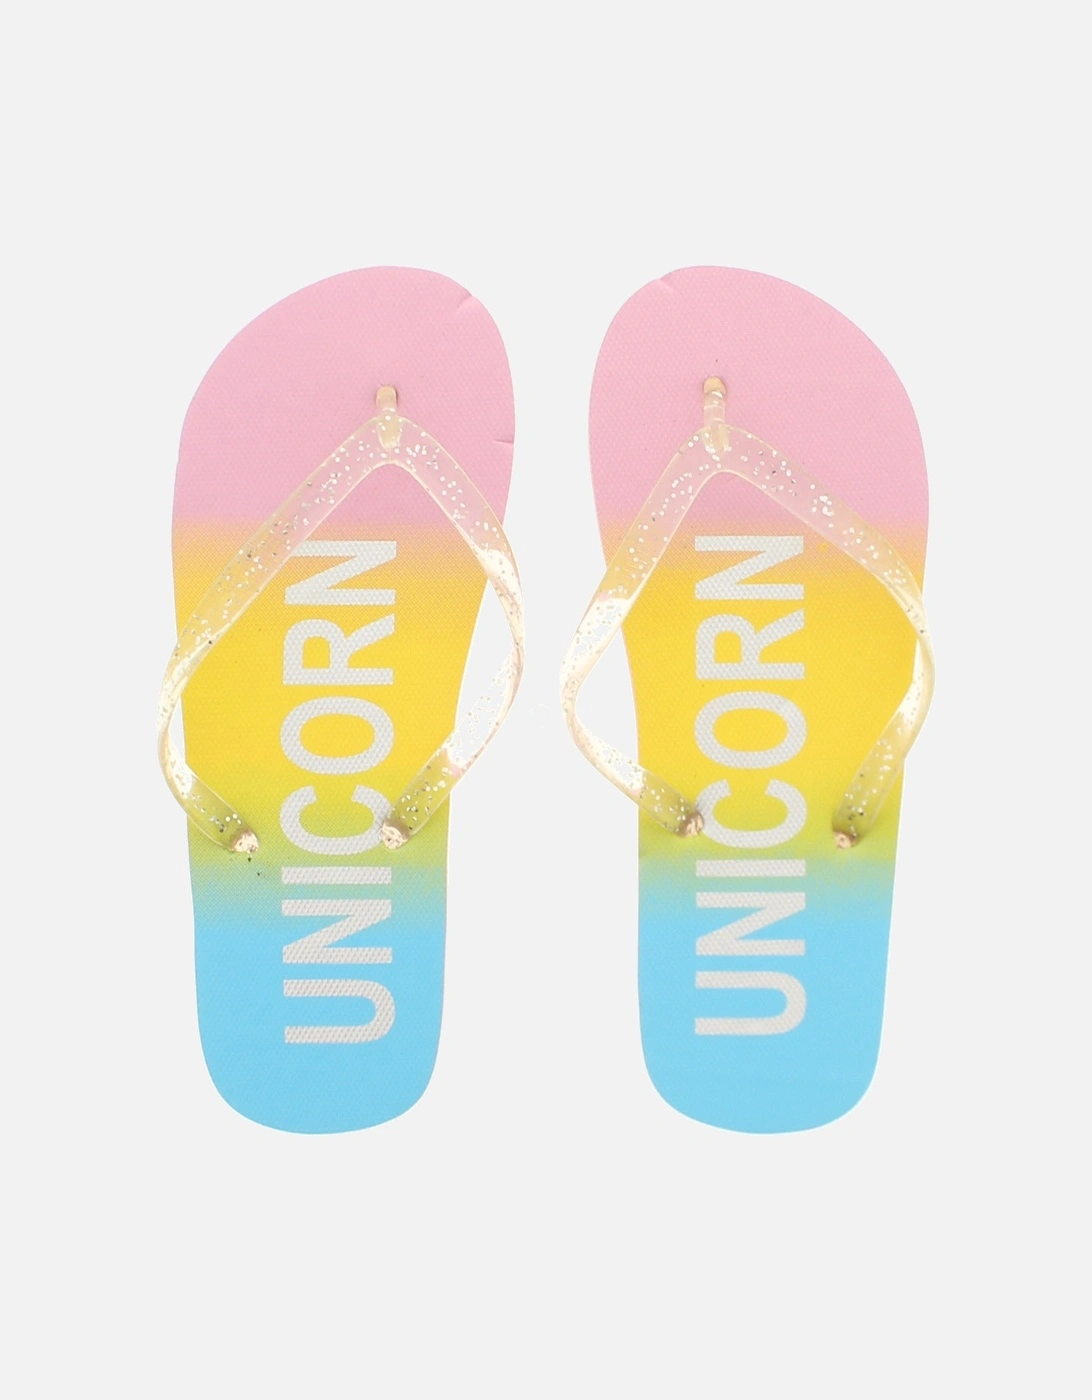 Girls Sandals Unicorn Flip Flop Sliders Toe Thong Pool Beach Pink UK Siz, 2 of 1